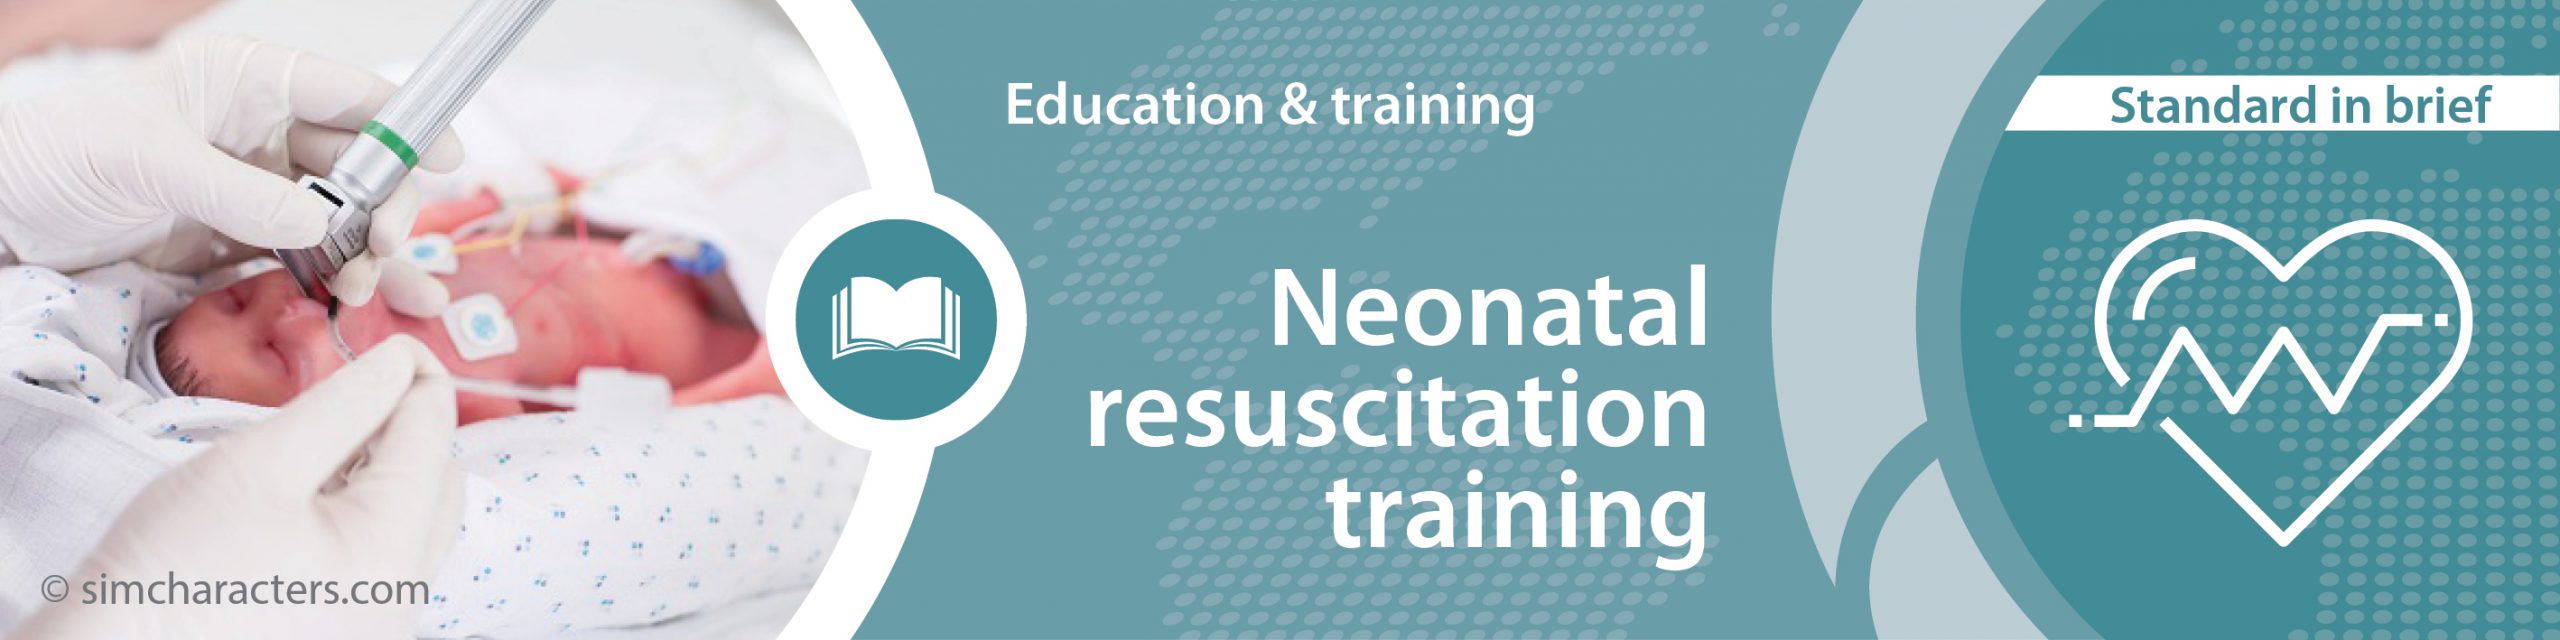 Neonatal Resuscitation Training Escnh European Standards Of Care